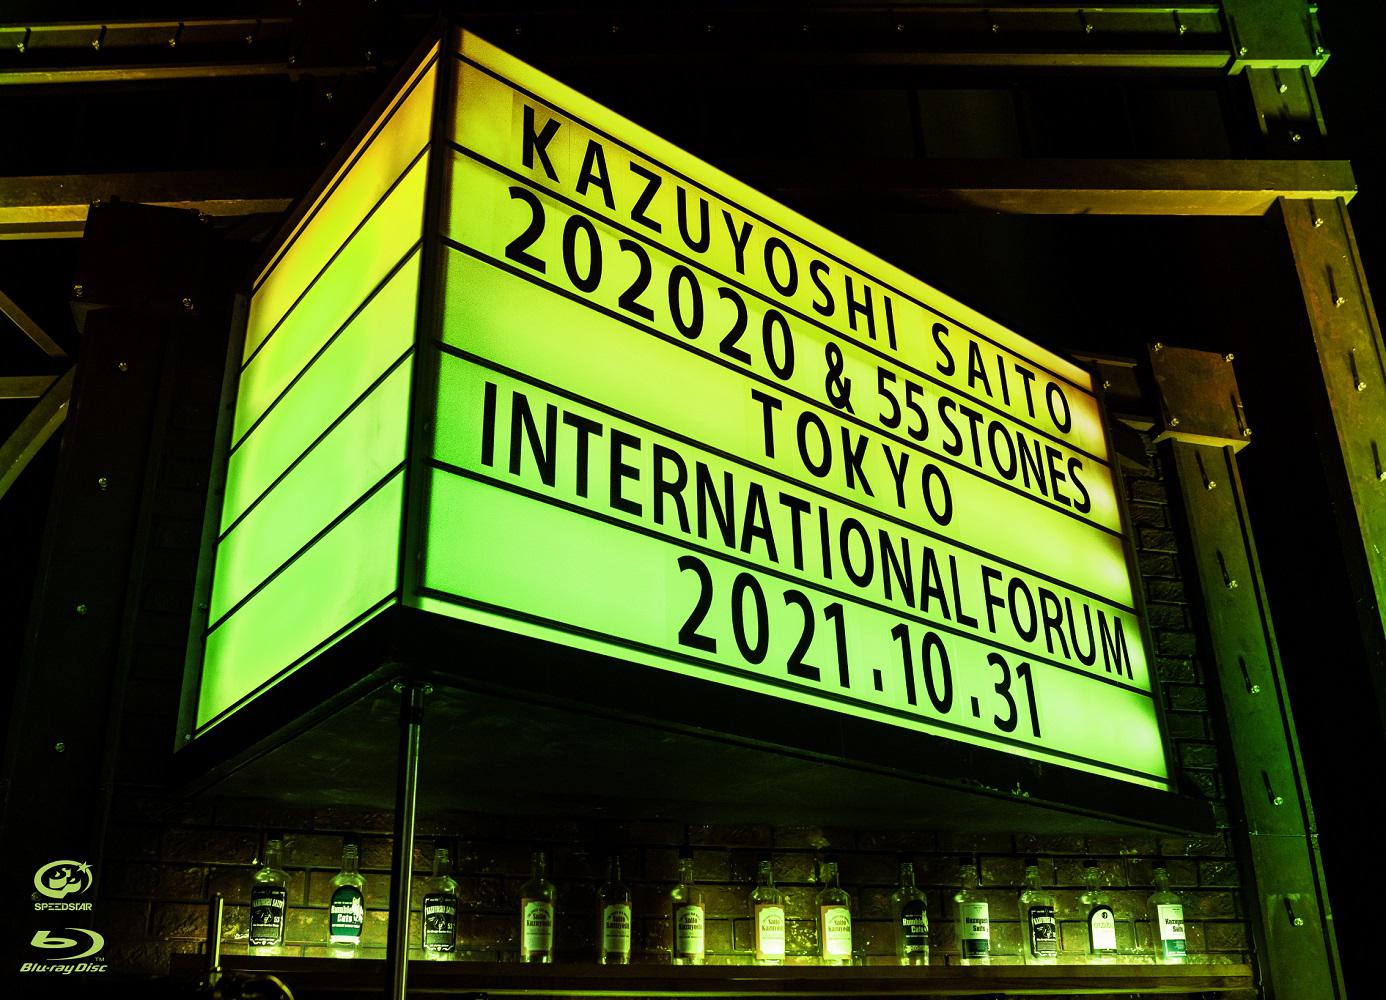 VICTOR ONLINE STORE限定セット】KAZUYOSHI SAITO LIVE TOUR 2021 “202020 u0026 55  STONES” Live at 東京国際フォーラム 2021.10.31（Blu-ray+写真集+フィギュア2体） | 斉藤和義 | VICTOR  ONLINE STORE